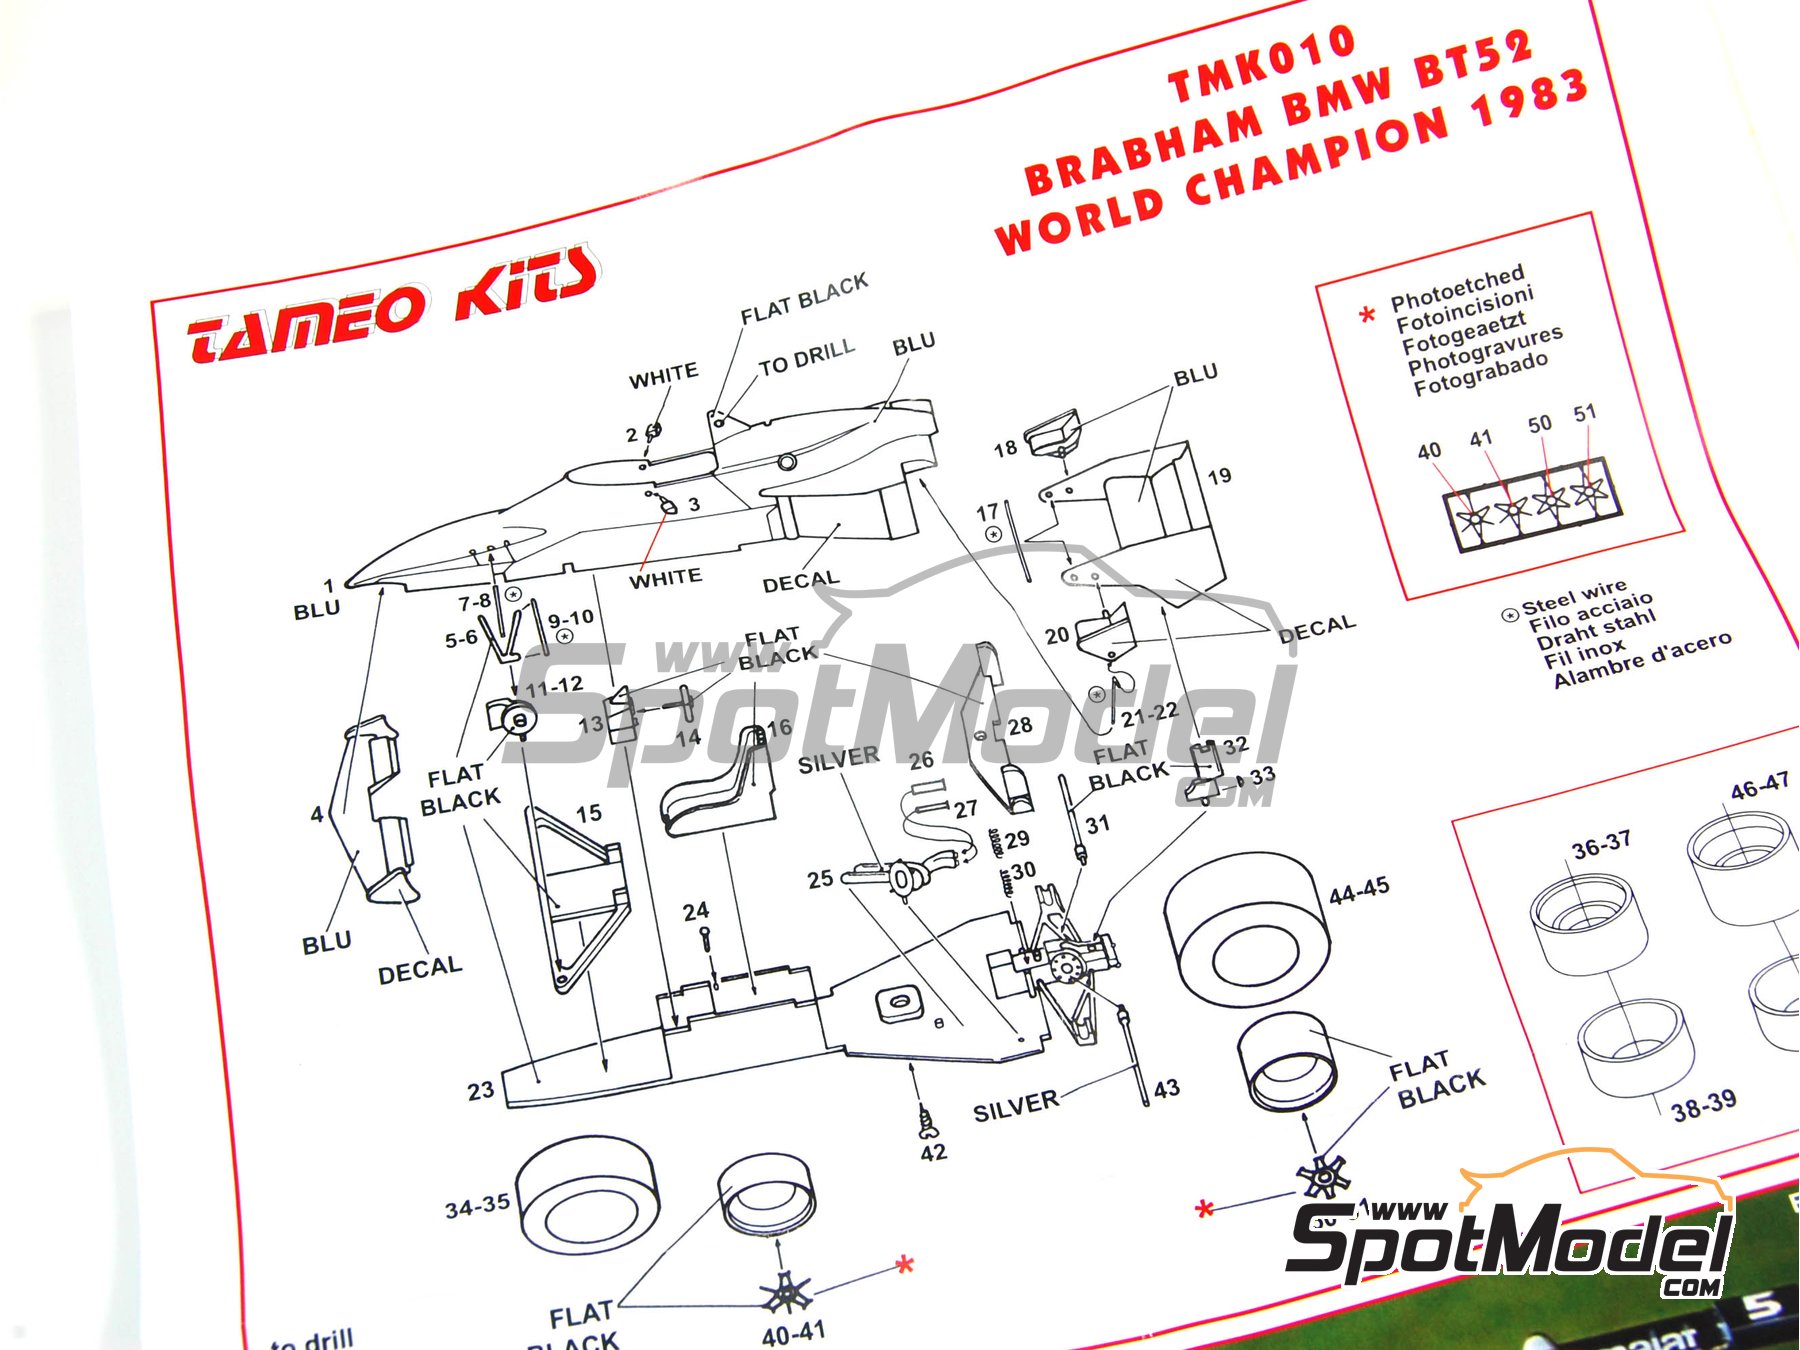 Brabham BT52, Tameo Kits DTMK010 (1983)